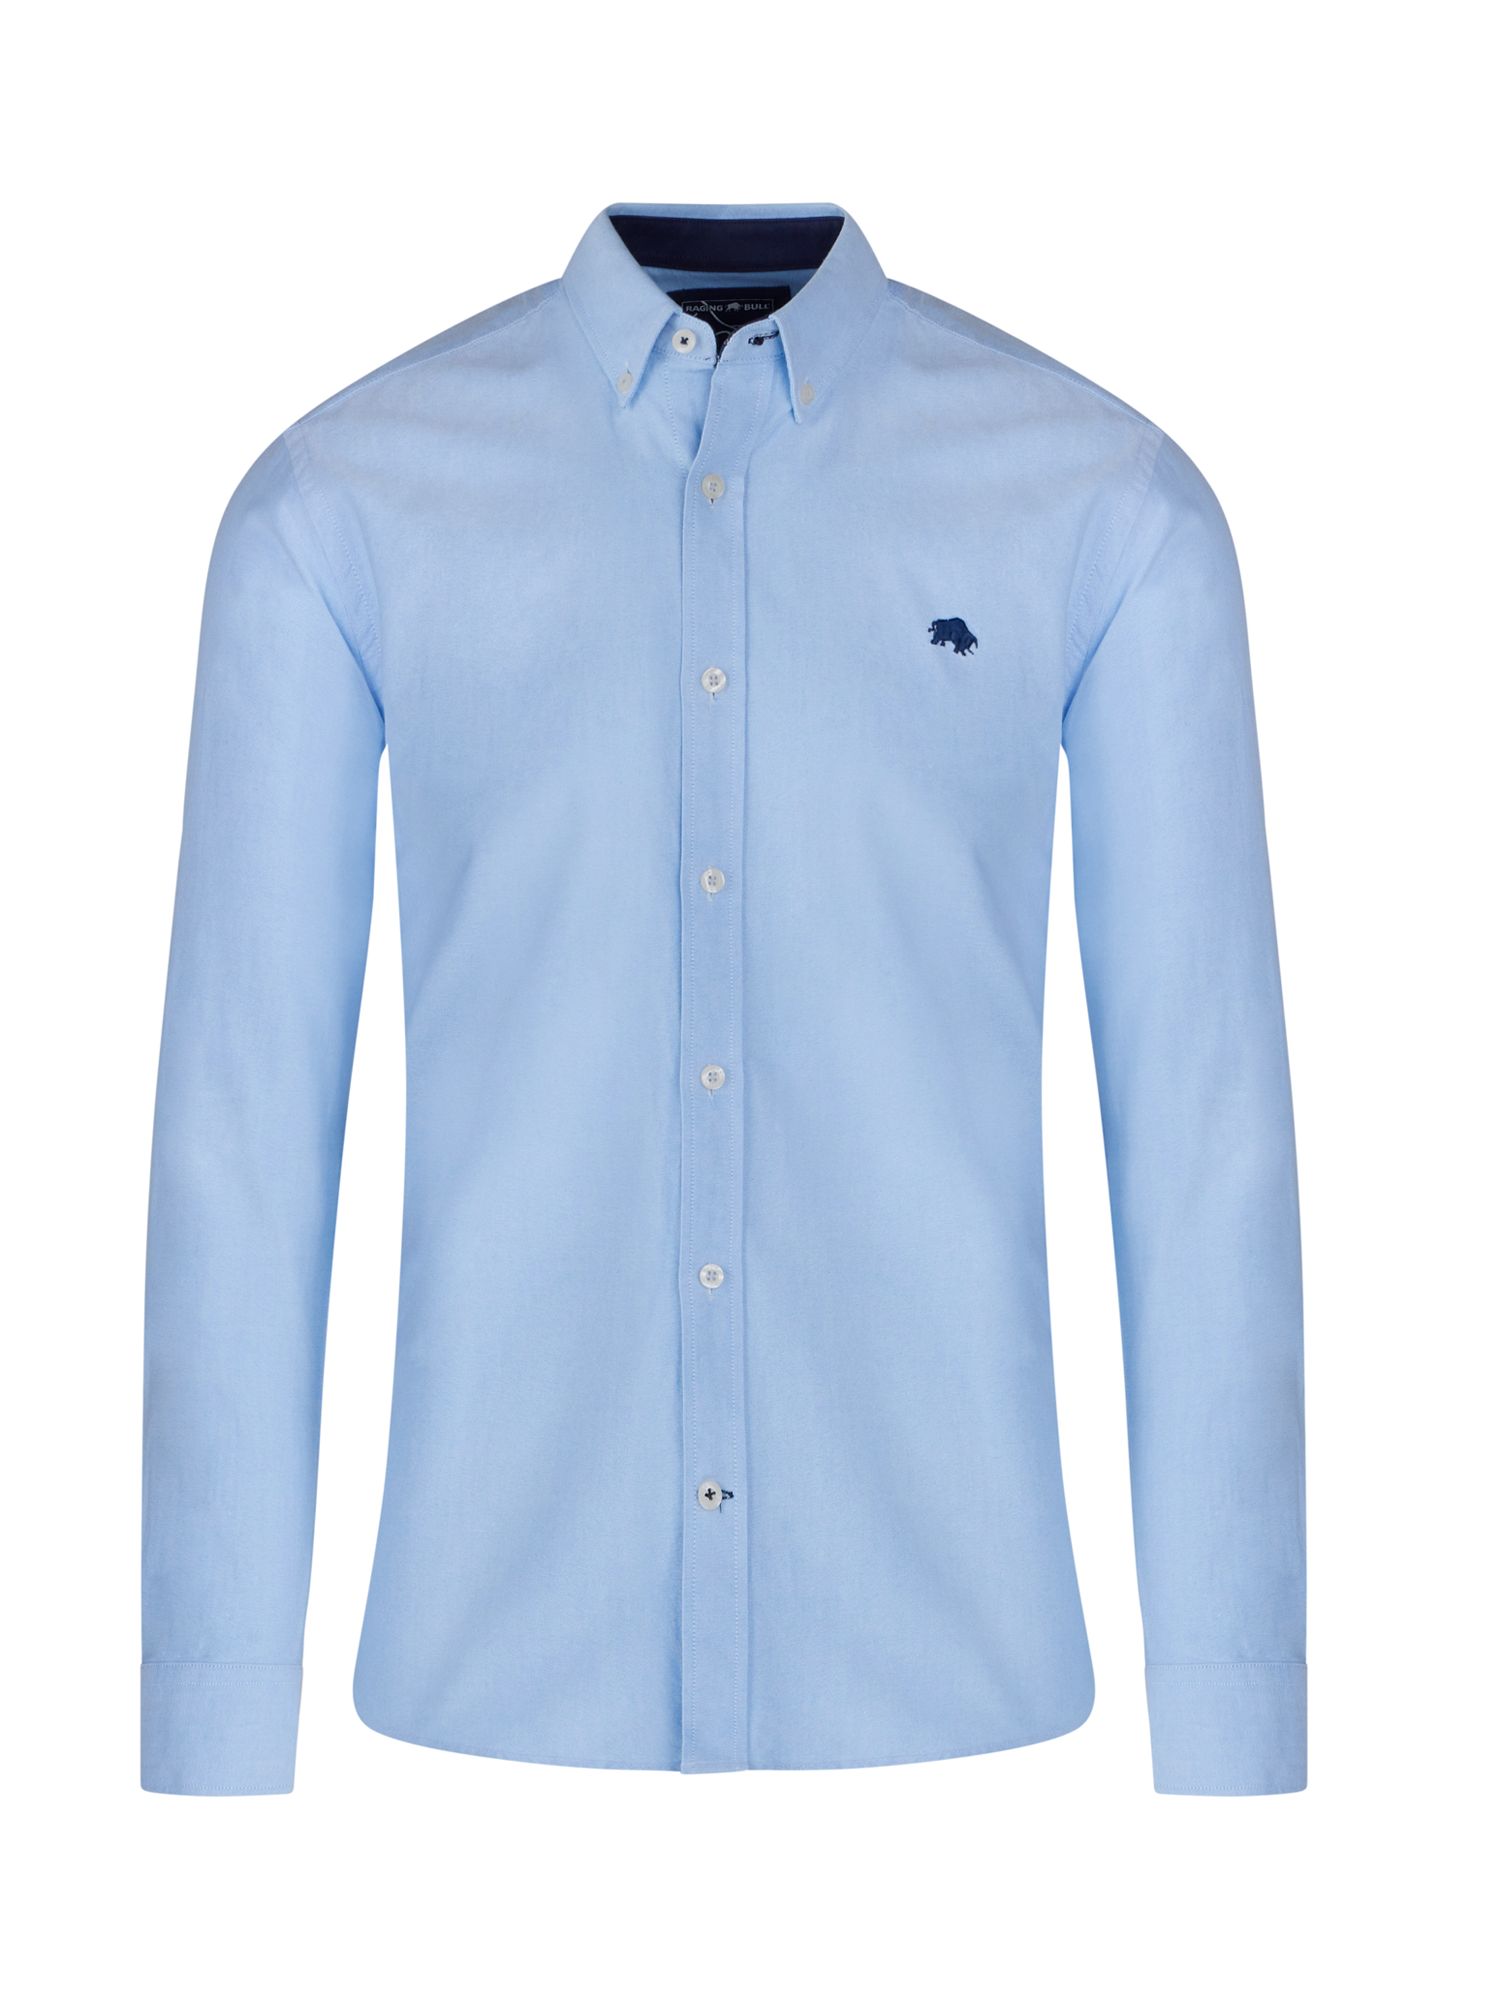 Raging Bull Classic Oxford Shirt, Sky Blue at John Lewis & Partners